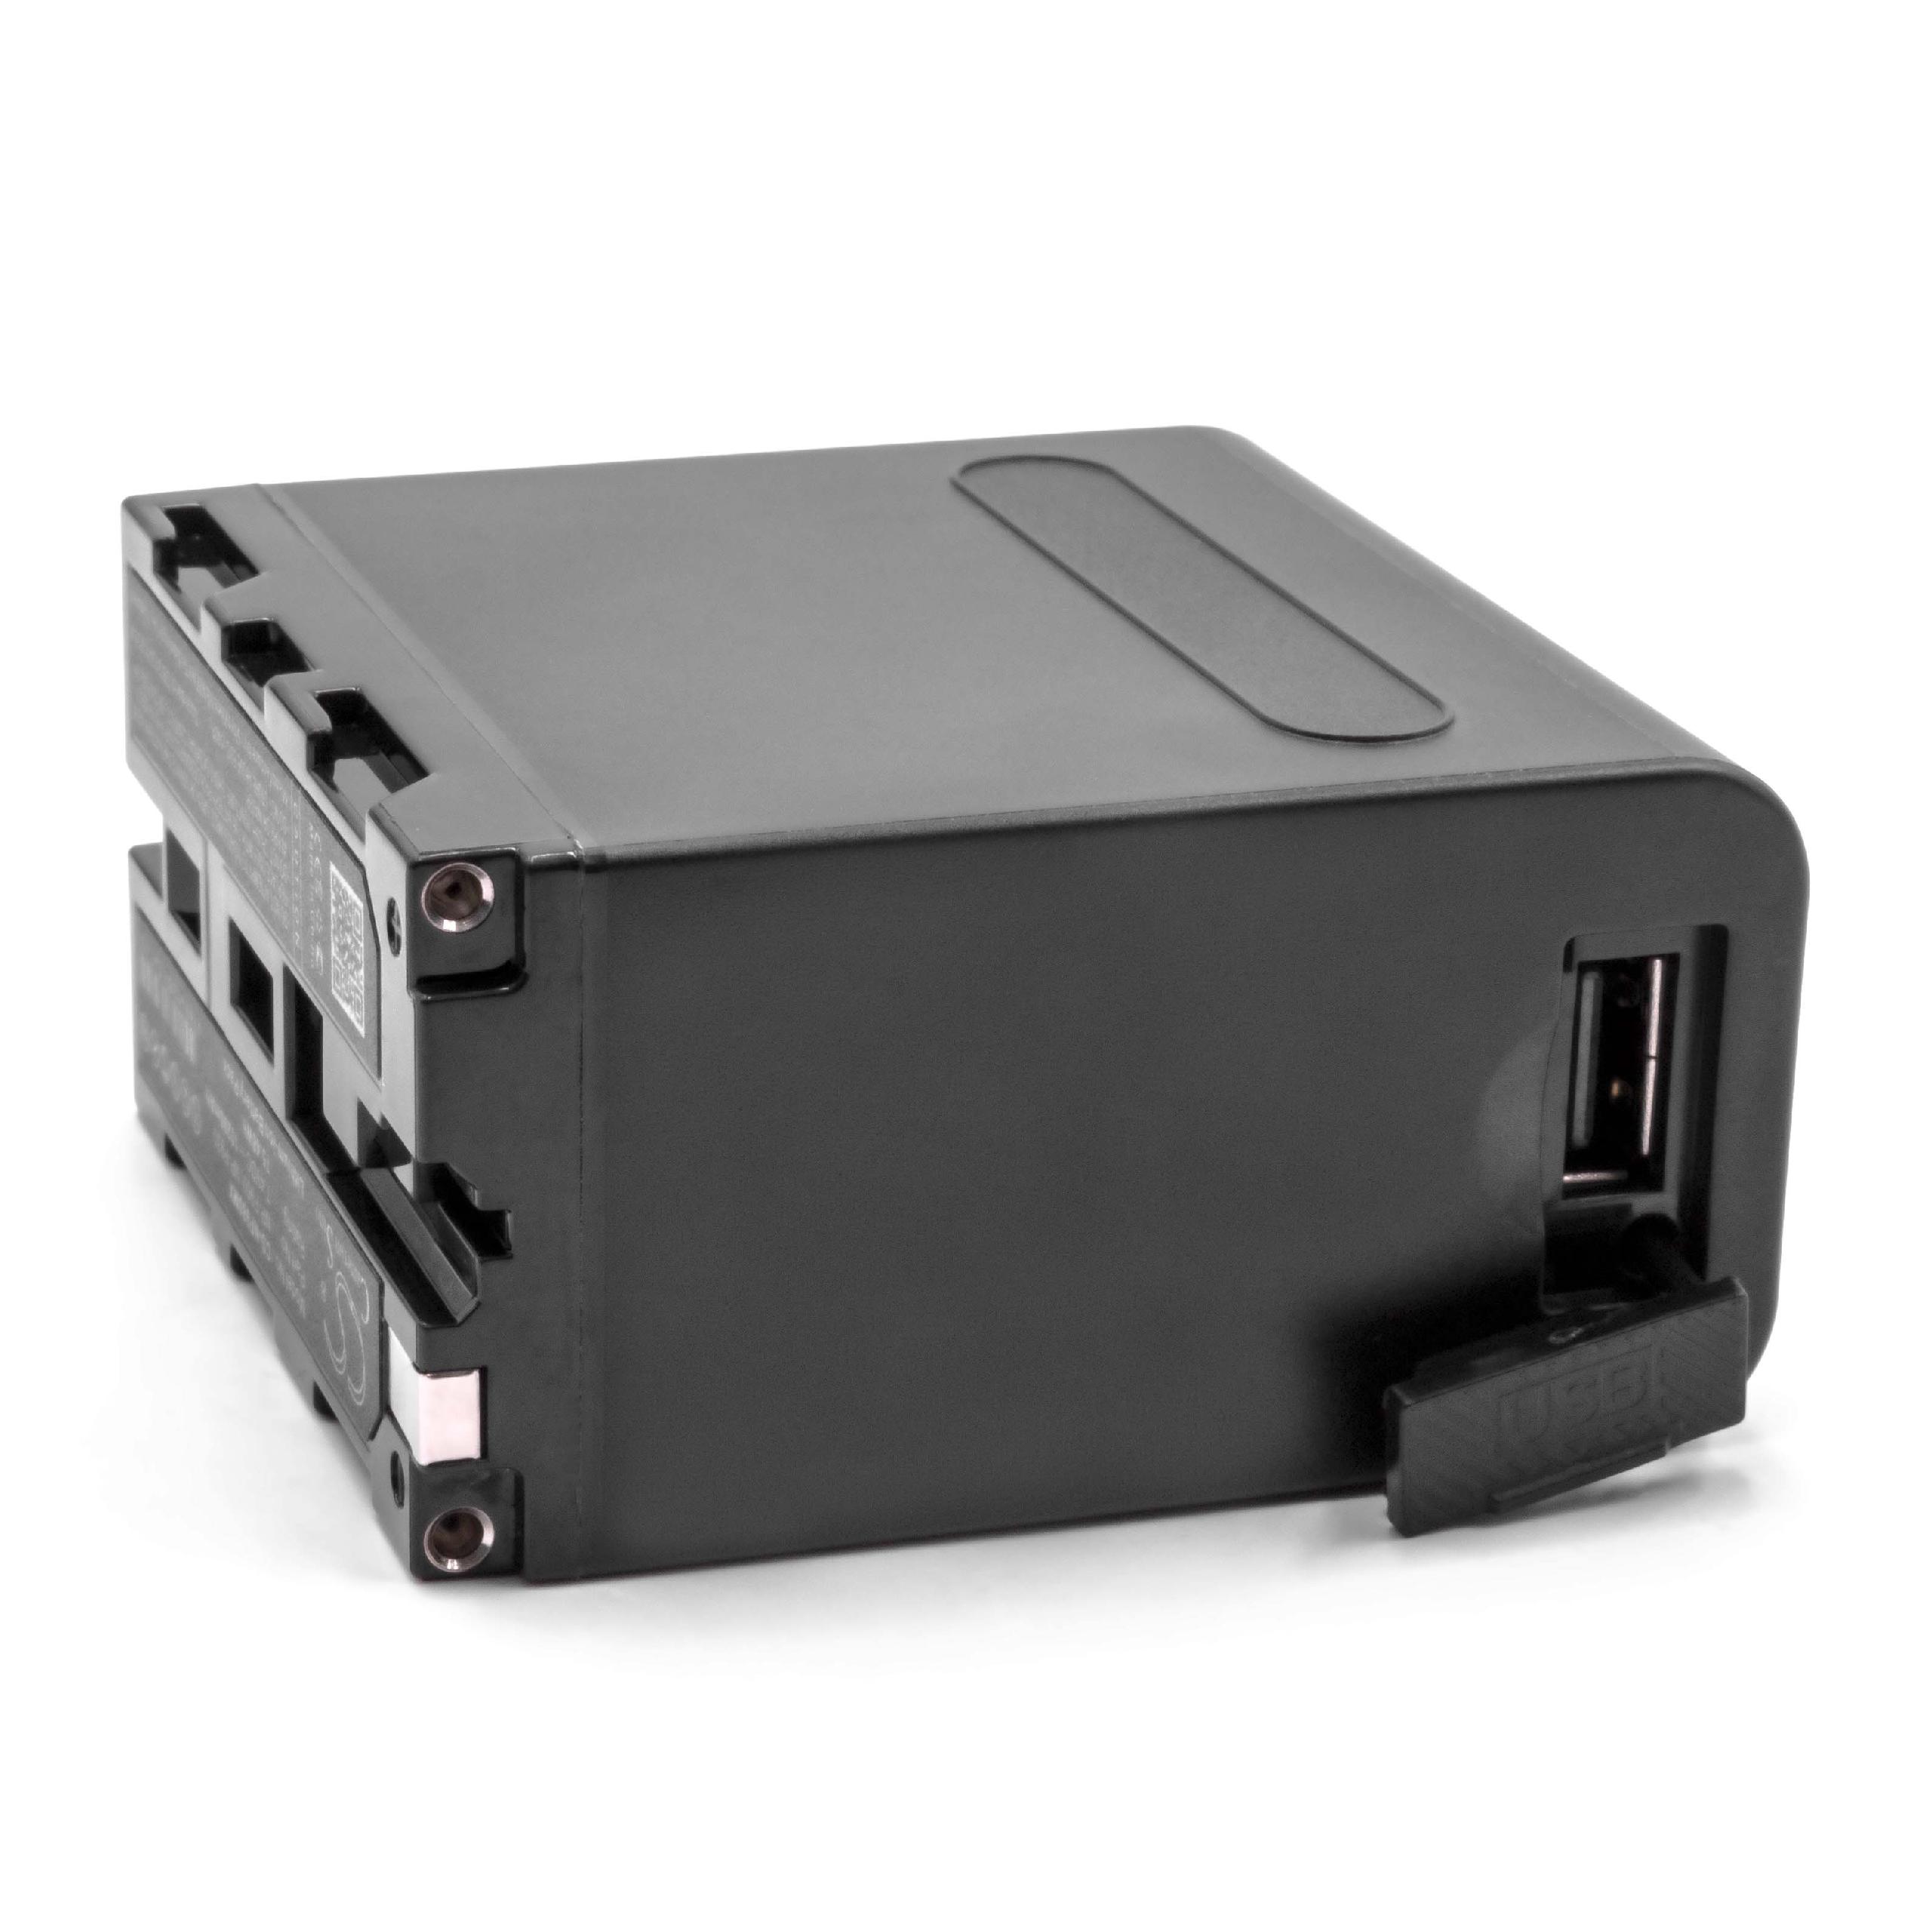 Akumulator do kamery cyfrowej / wideo zamiennik Sony NP-F930, NP-F950, NP-F930/B - 10200 mAh 7,4 V Li-Ion